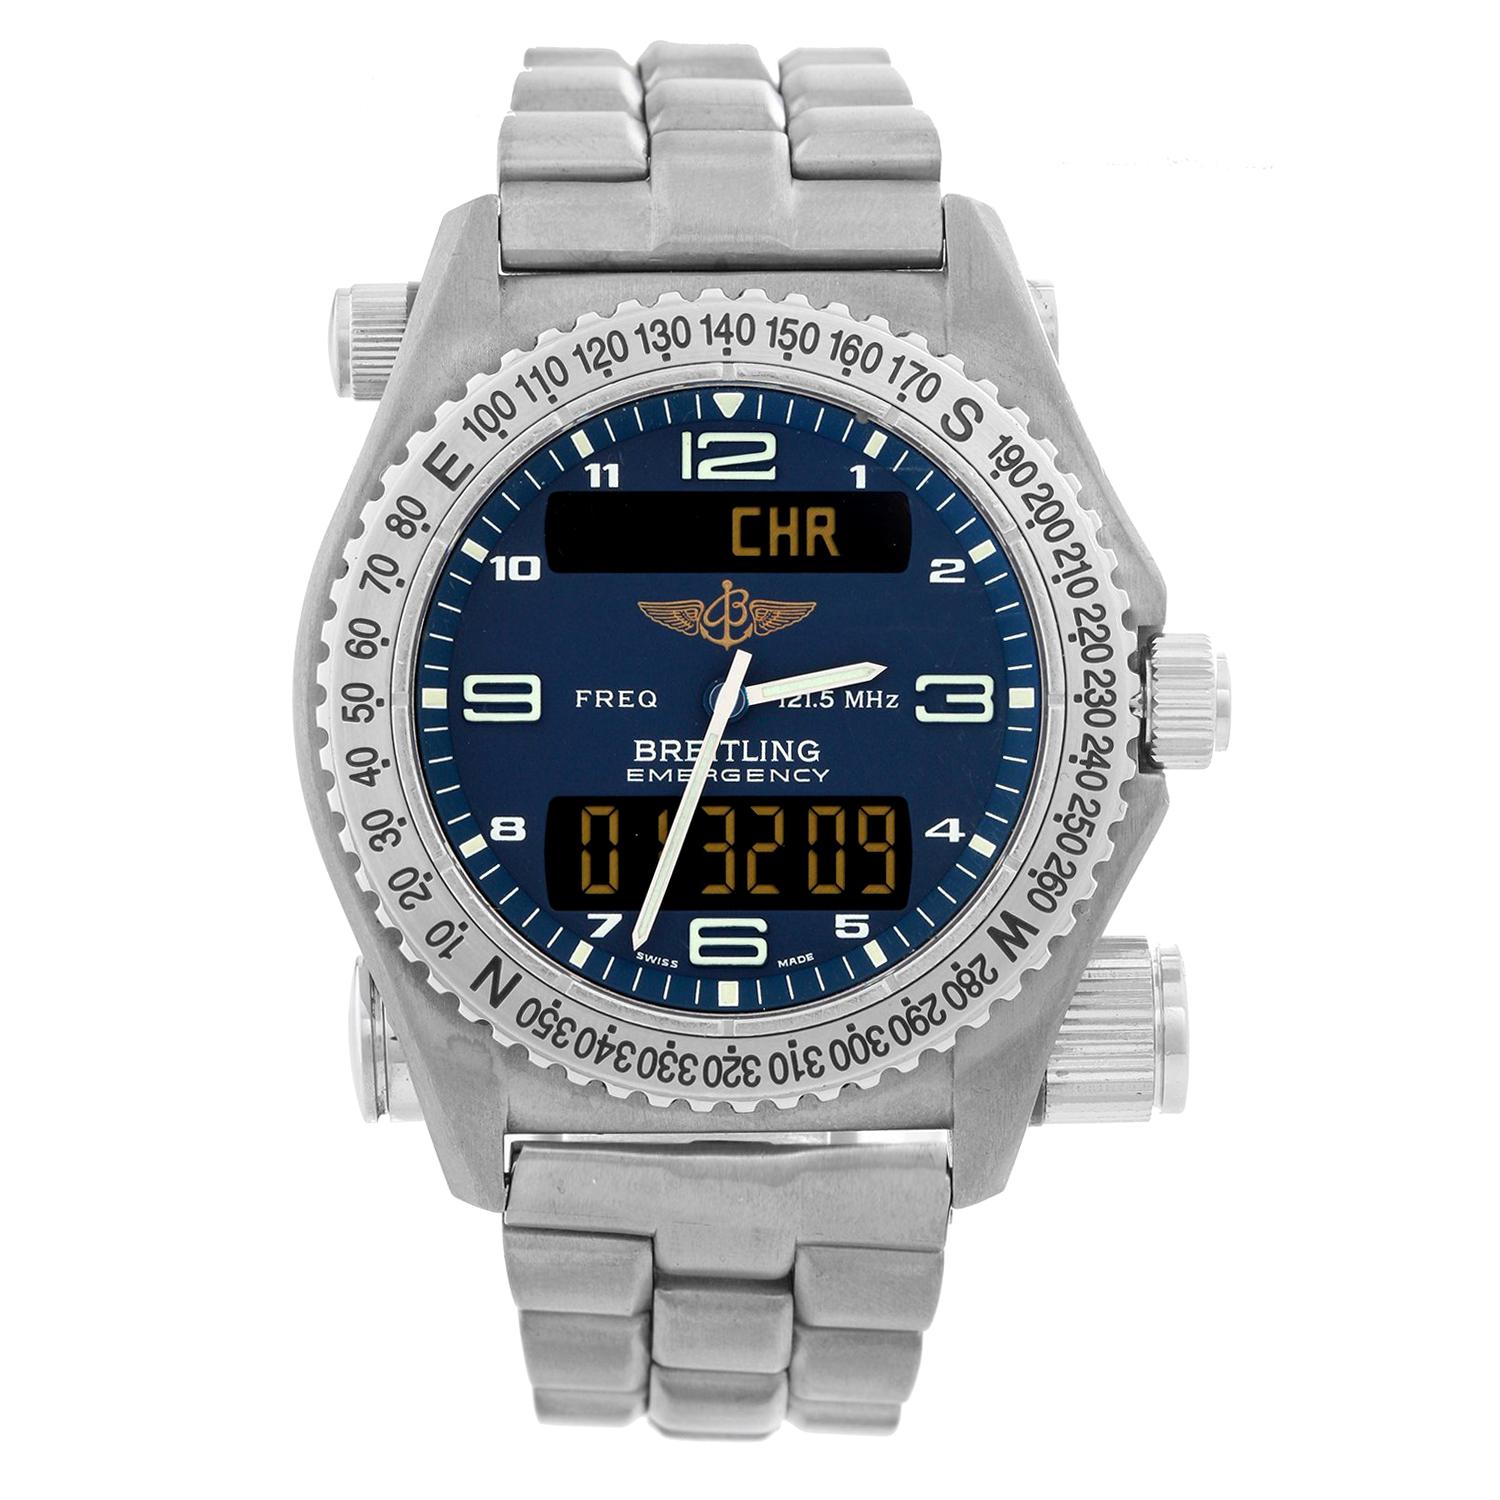 Breitling Emergency Men's Titanium Watch E56121.1